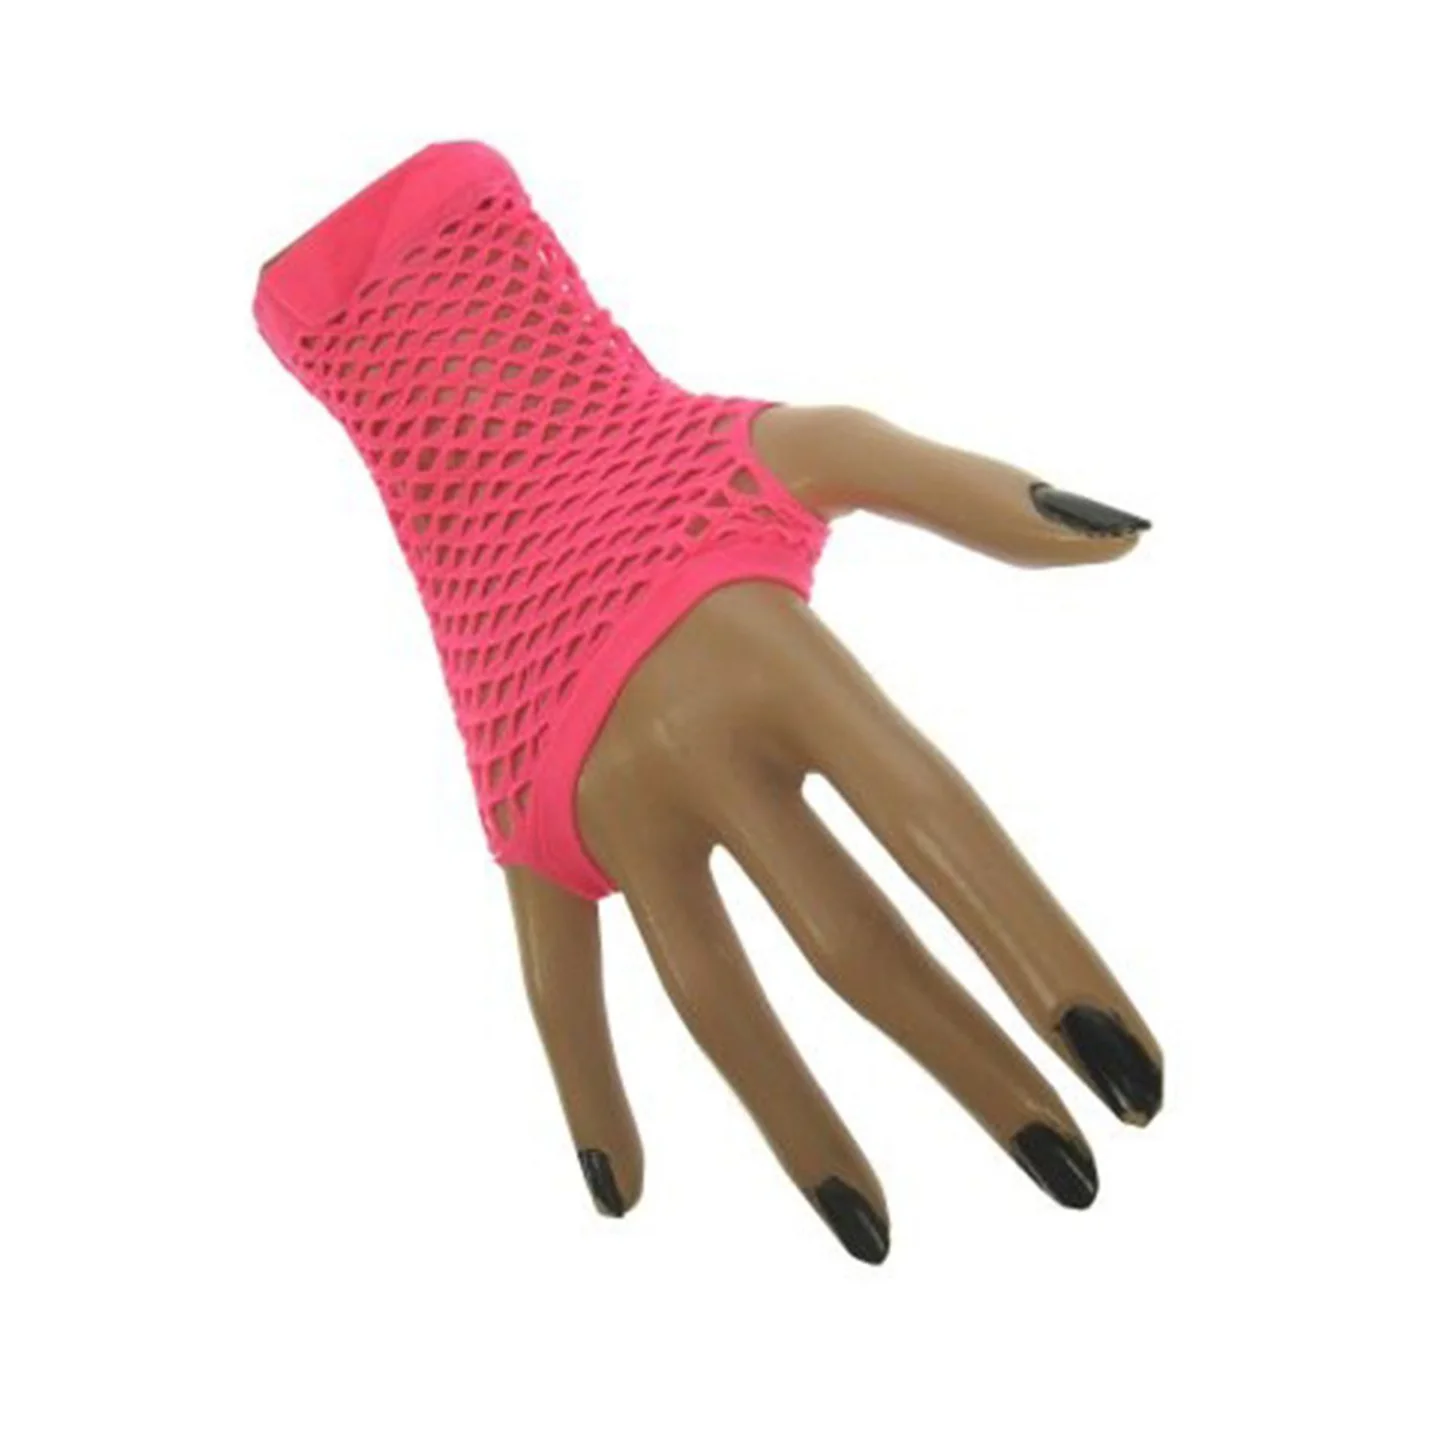 visnet handschoen fluor roze.